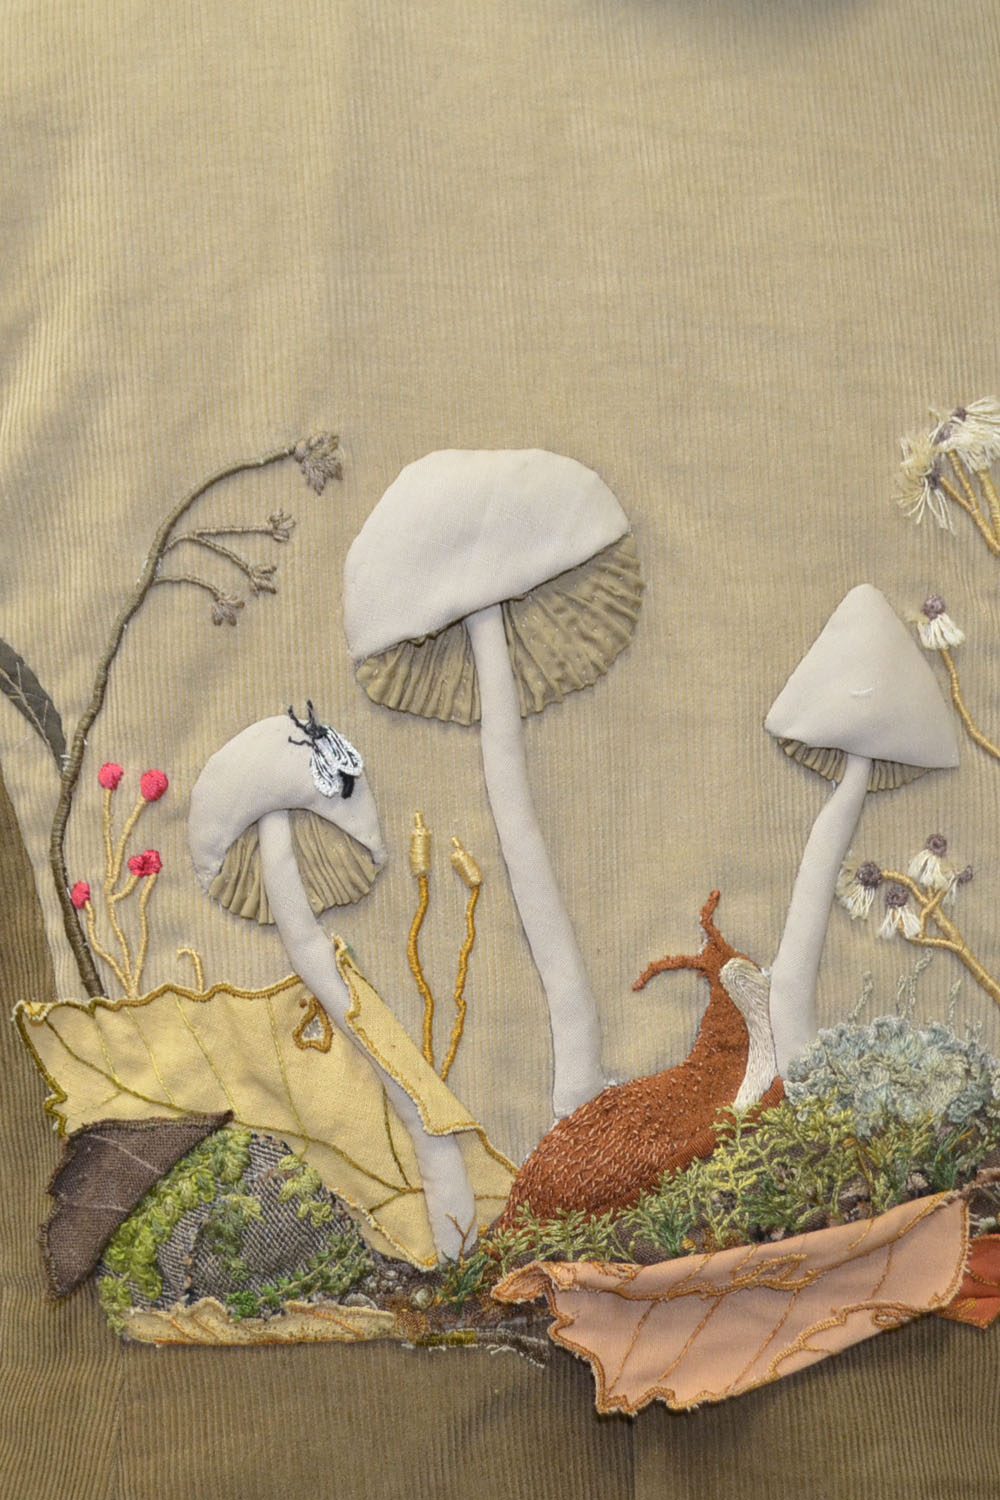 Incredible embroidered mushroom embellished jacket